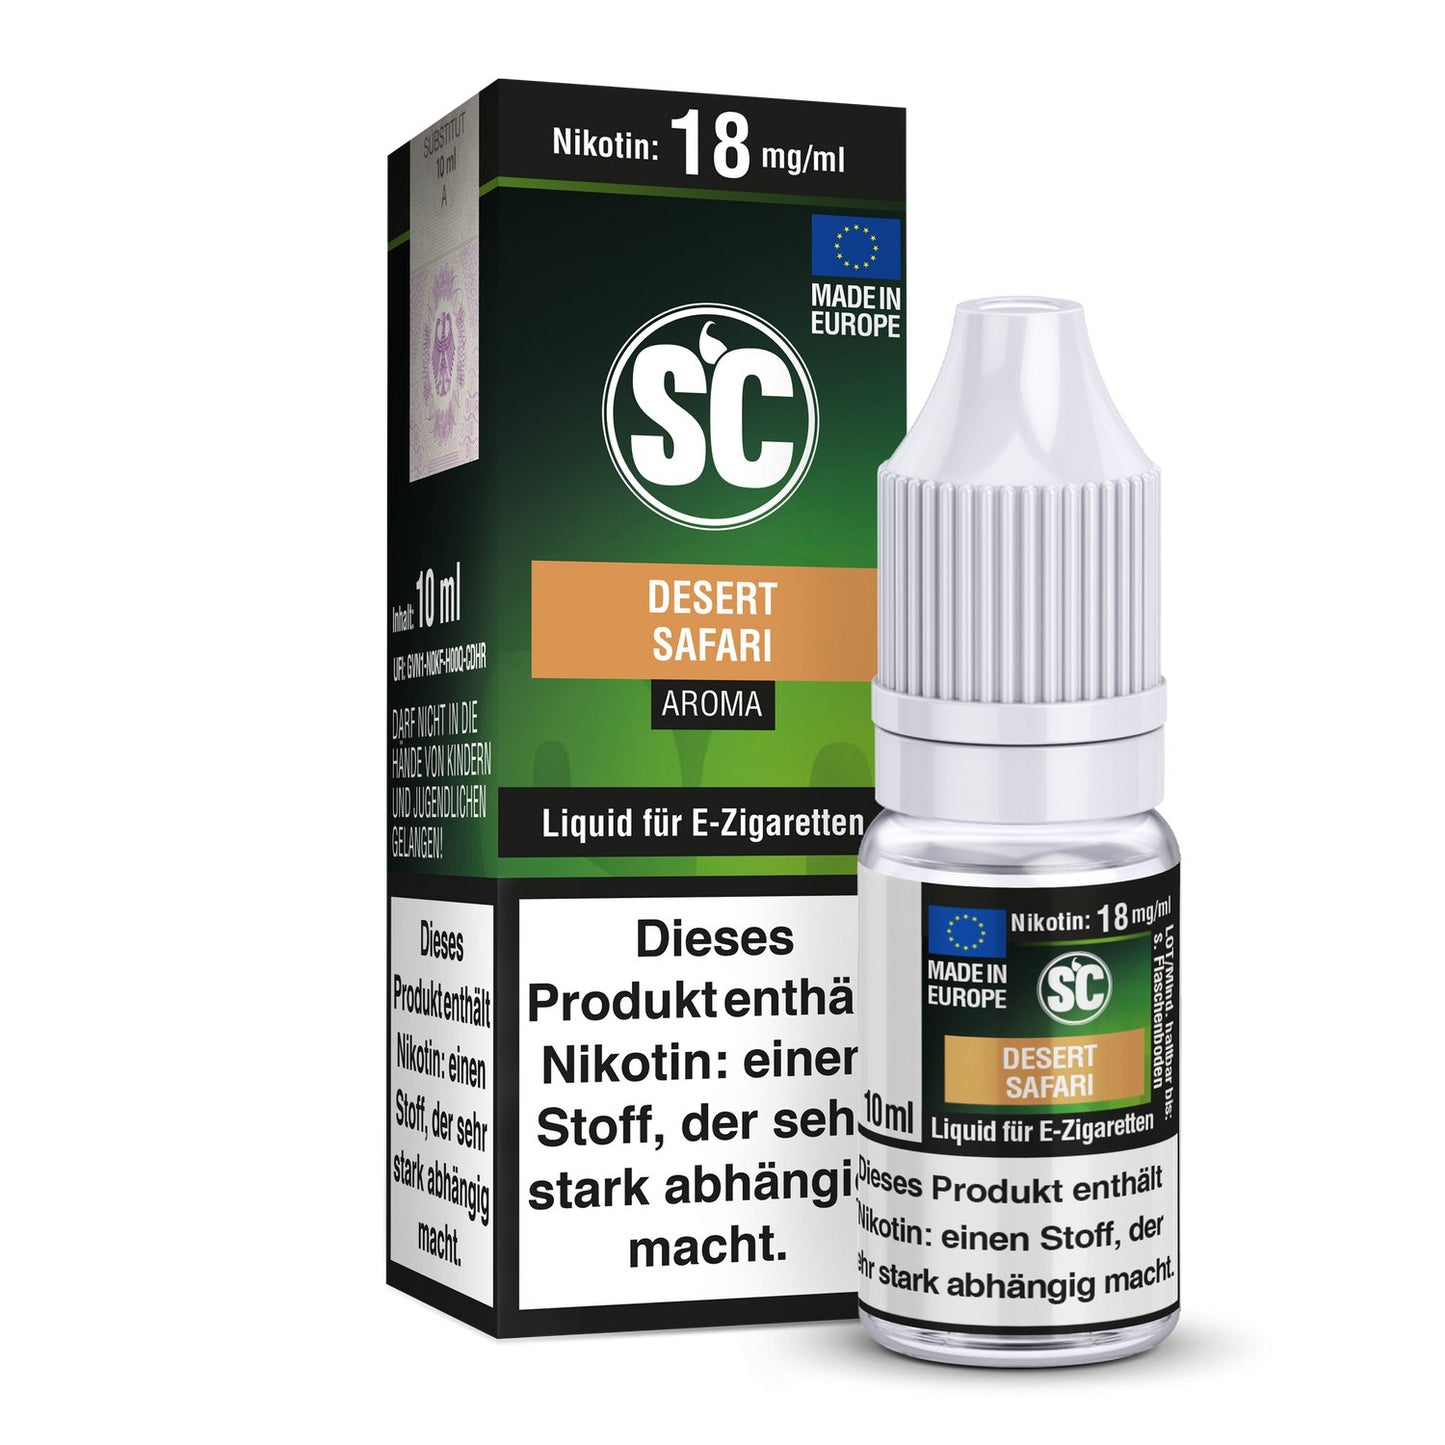 SC - Desert Safari Tabak - 10ml Fertigliquid (Nikotinfrei/Nikotin) - 1er Packung 0 mg/ml - Vapes4you